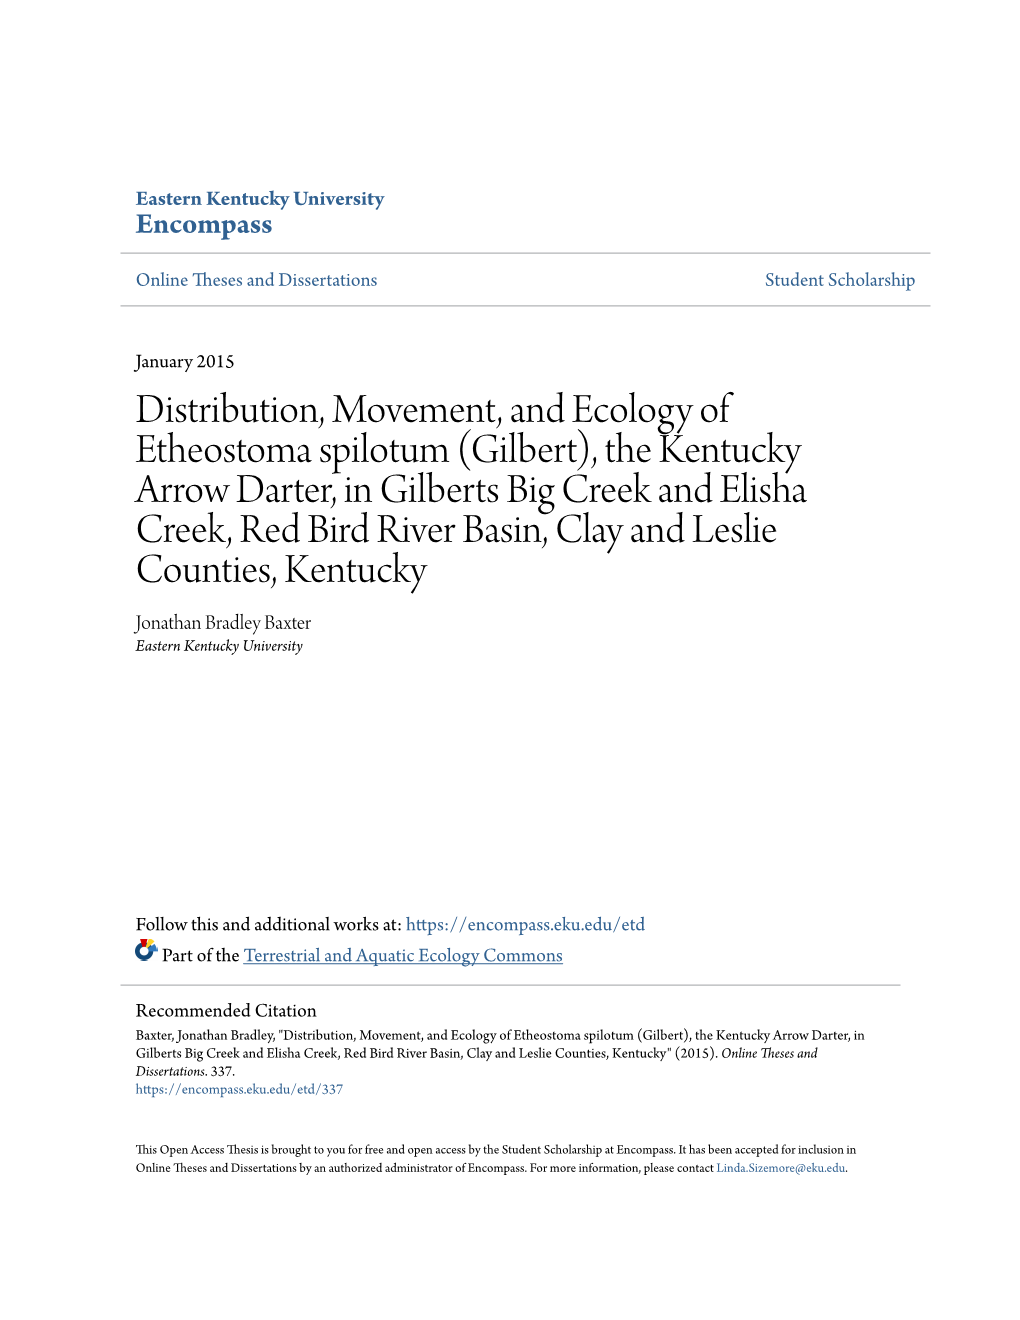 Distribution, Movement, and Ecology of Etheostoma Spilotum